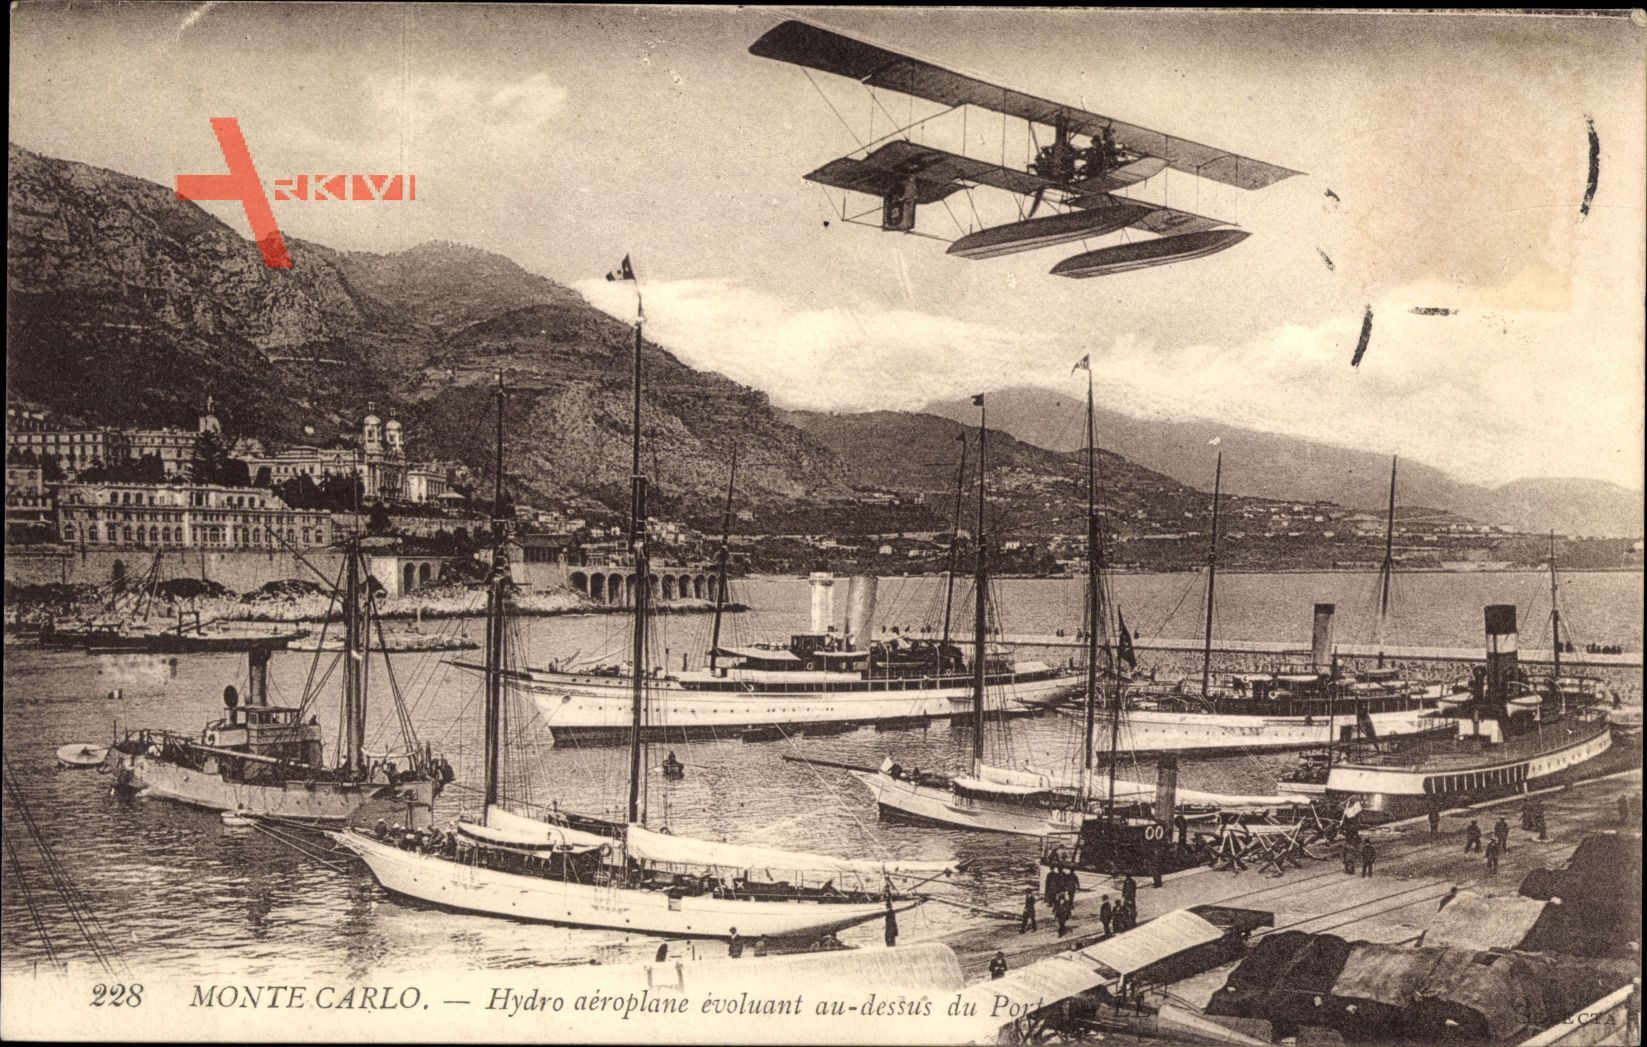 Monte Carlo Monaco, Wasserflugzeug, Hafenpartie, Hydro aeroplane